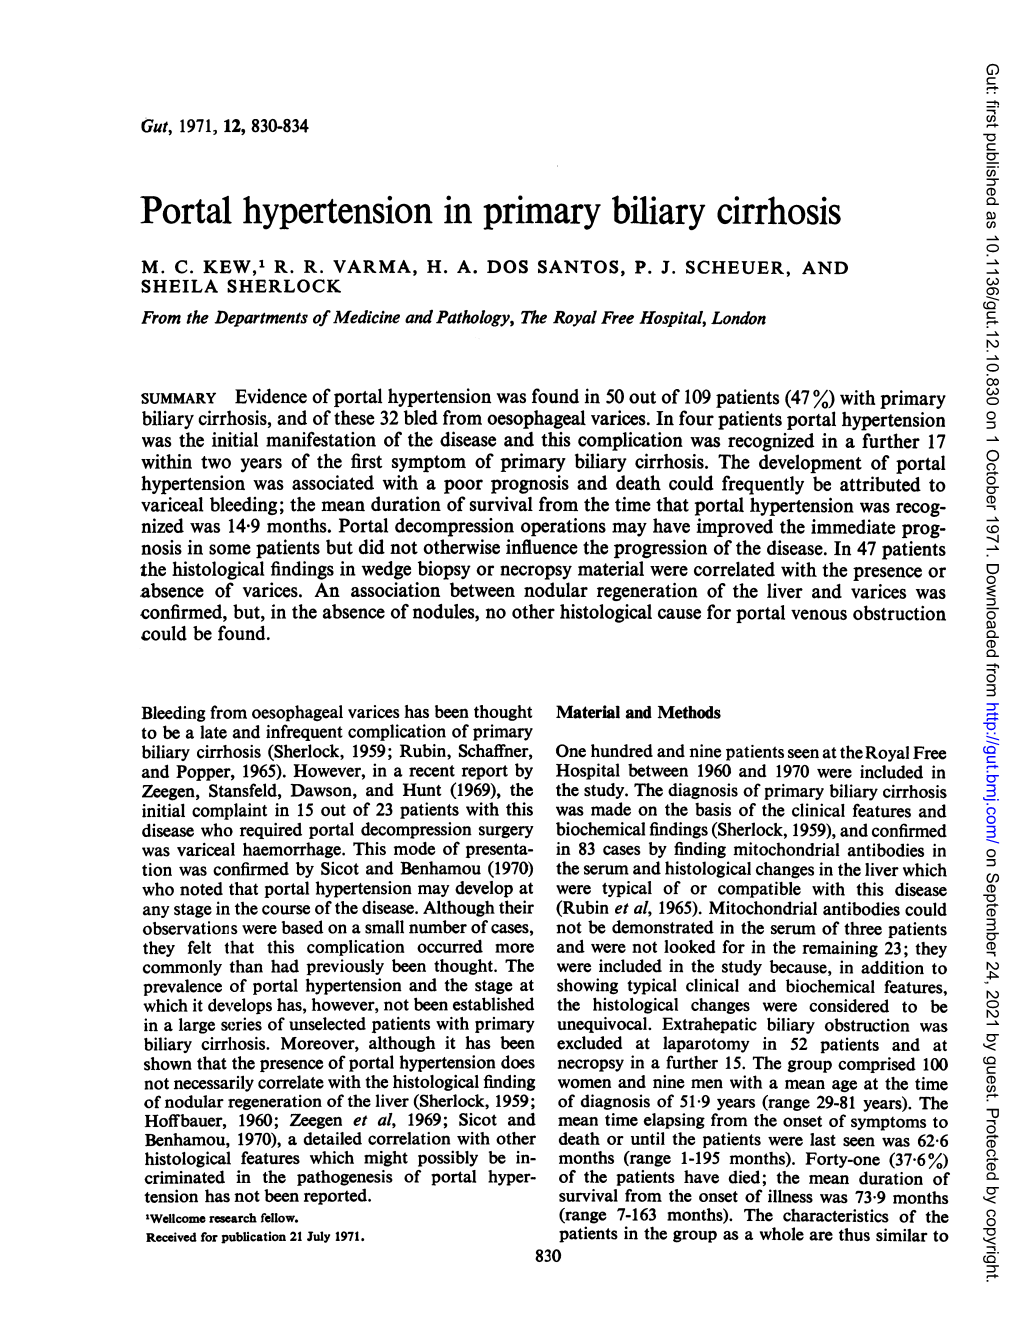 Portal Hypertension in Primary Biliary Cirrhosis